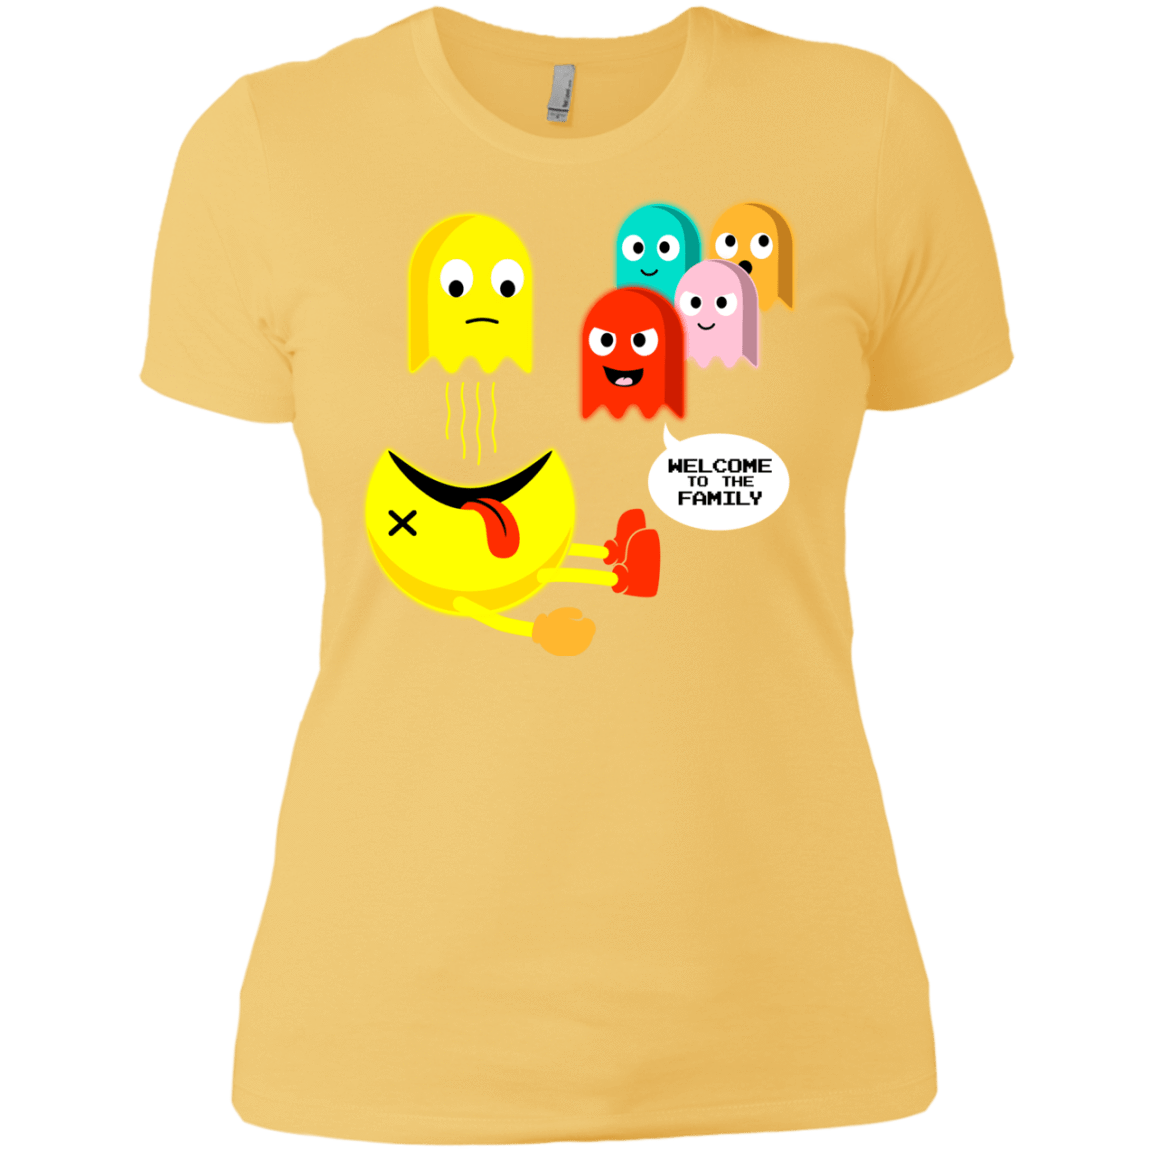 T-Shirts Banana Cream/ / X-Small Sin Título Women's Premium T-Shirt